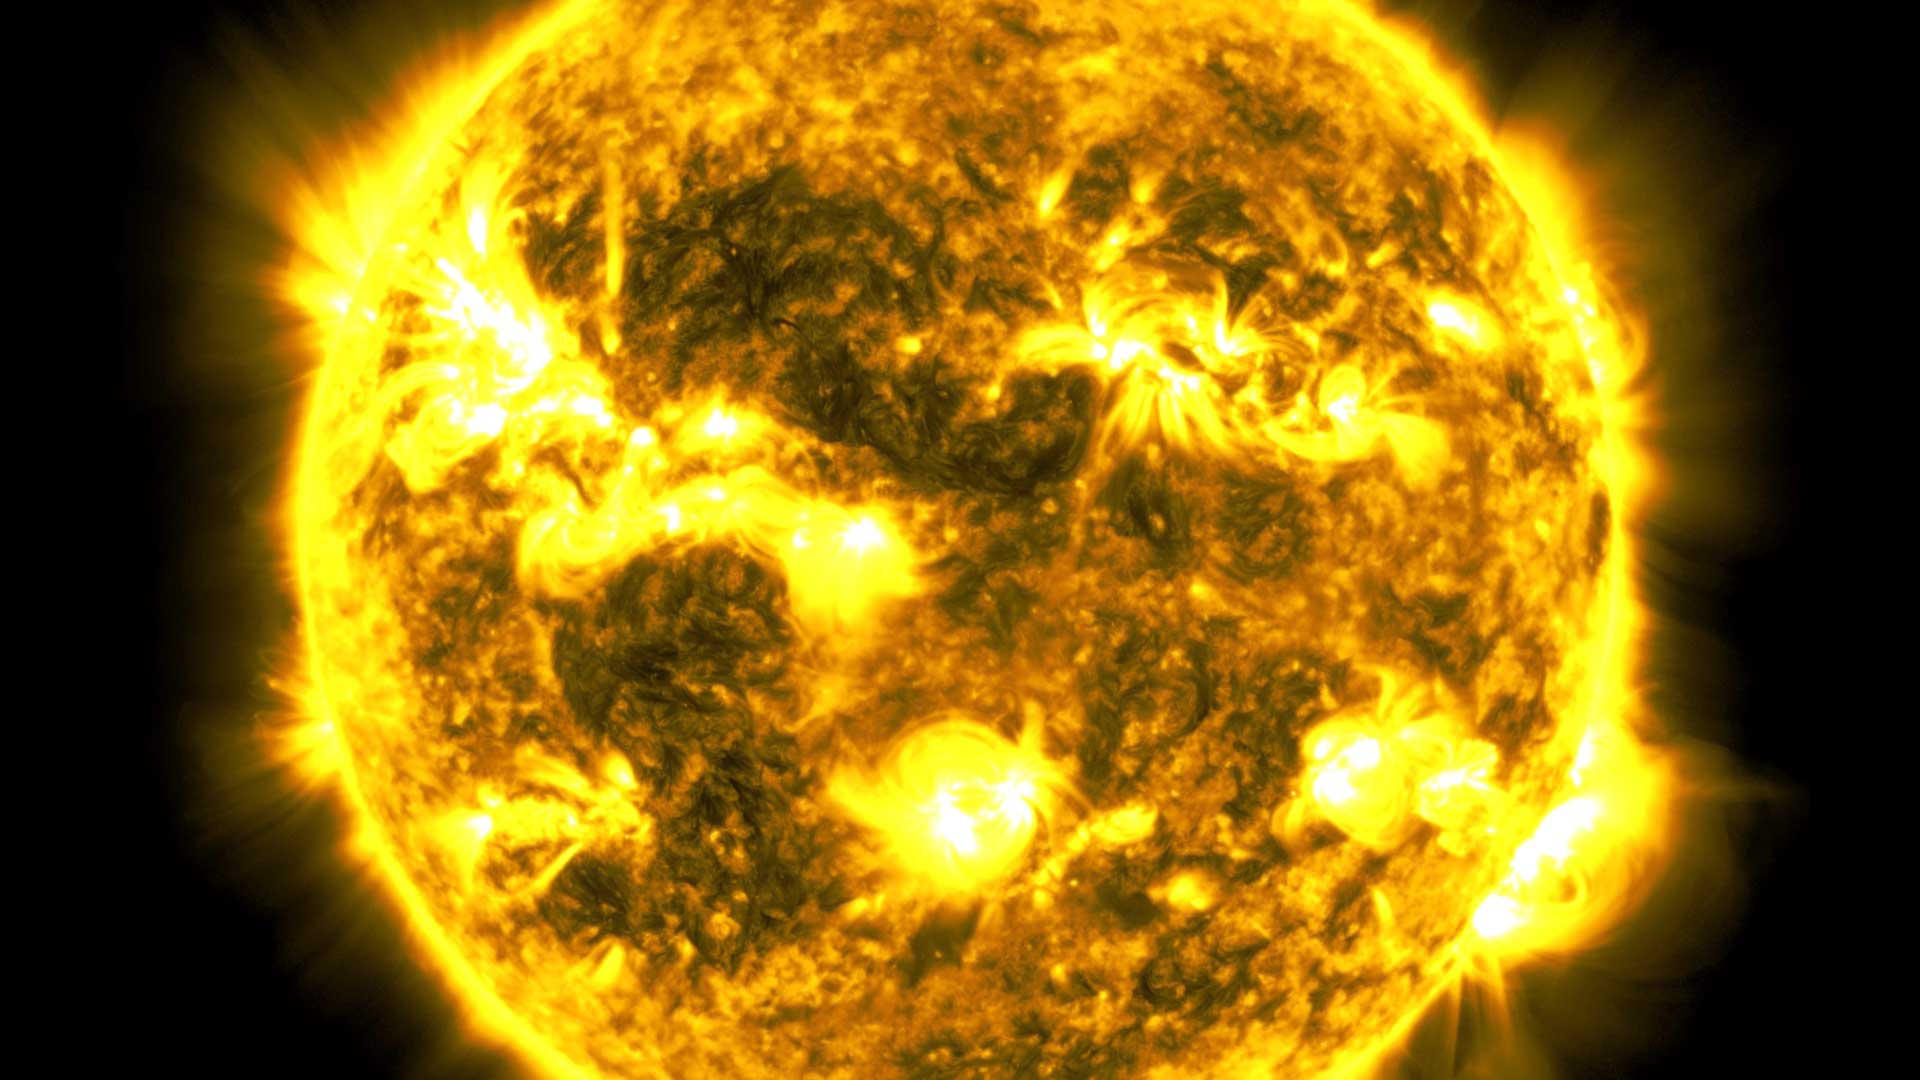 image of the Sun and its corona